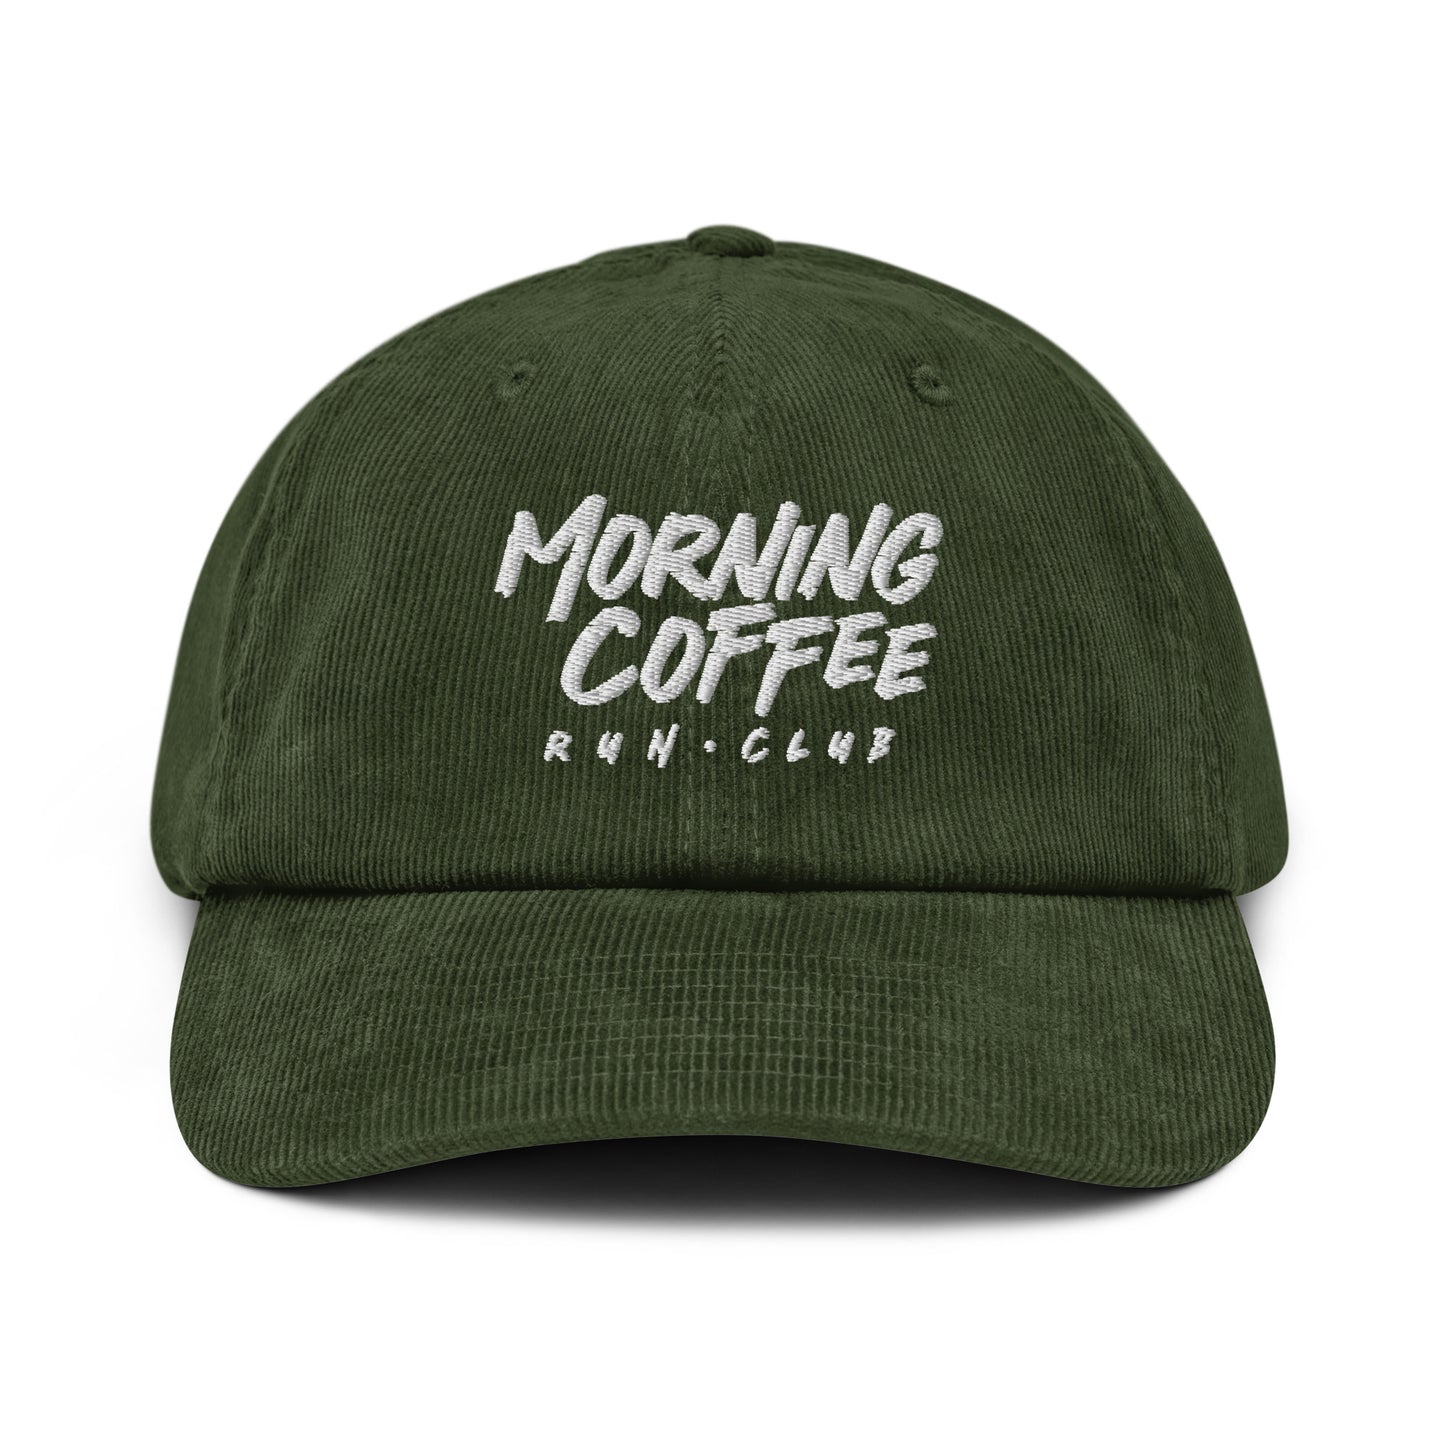 Morning Coffee Run Club Wordmark Corduroy Hat